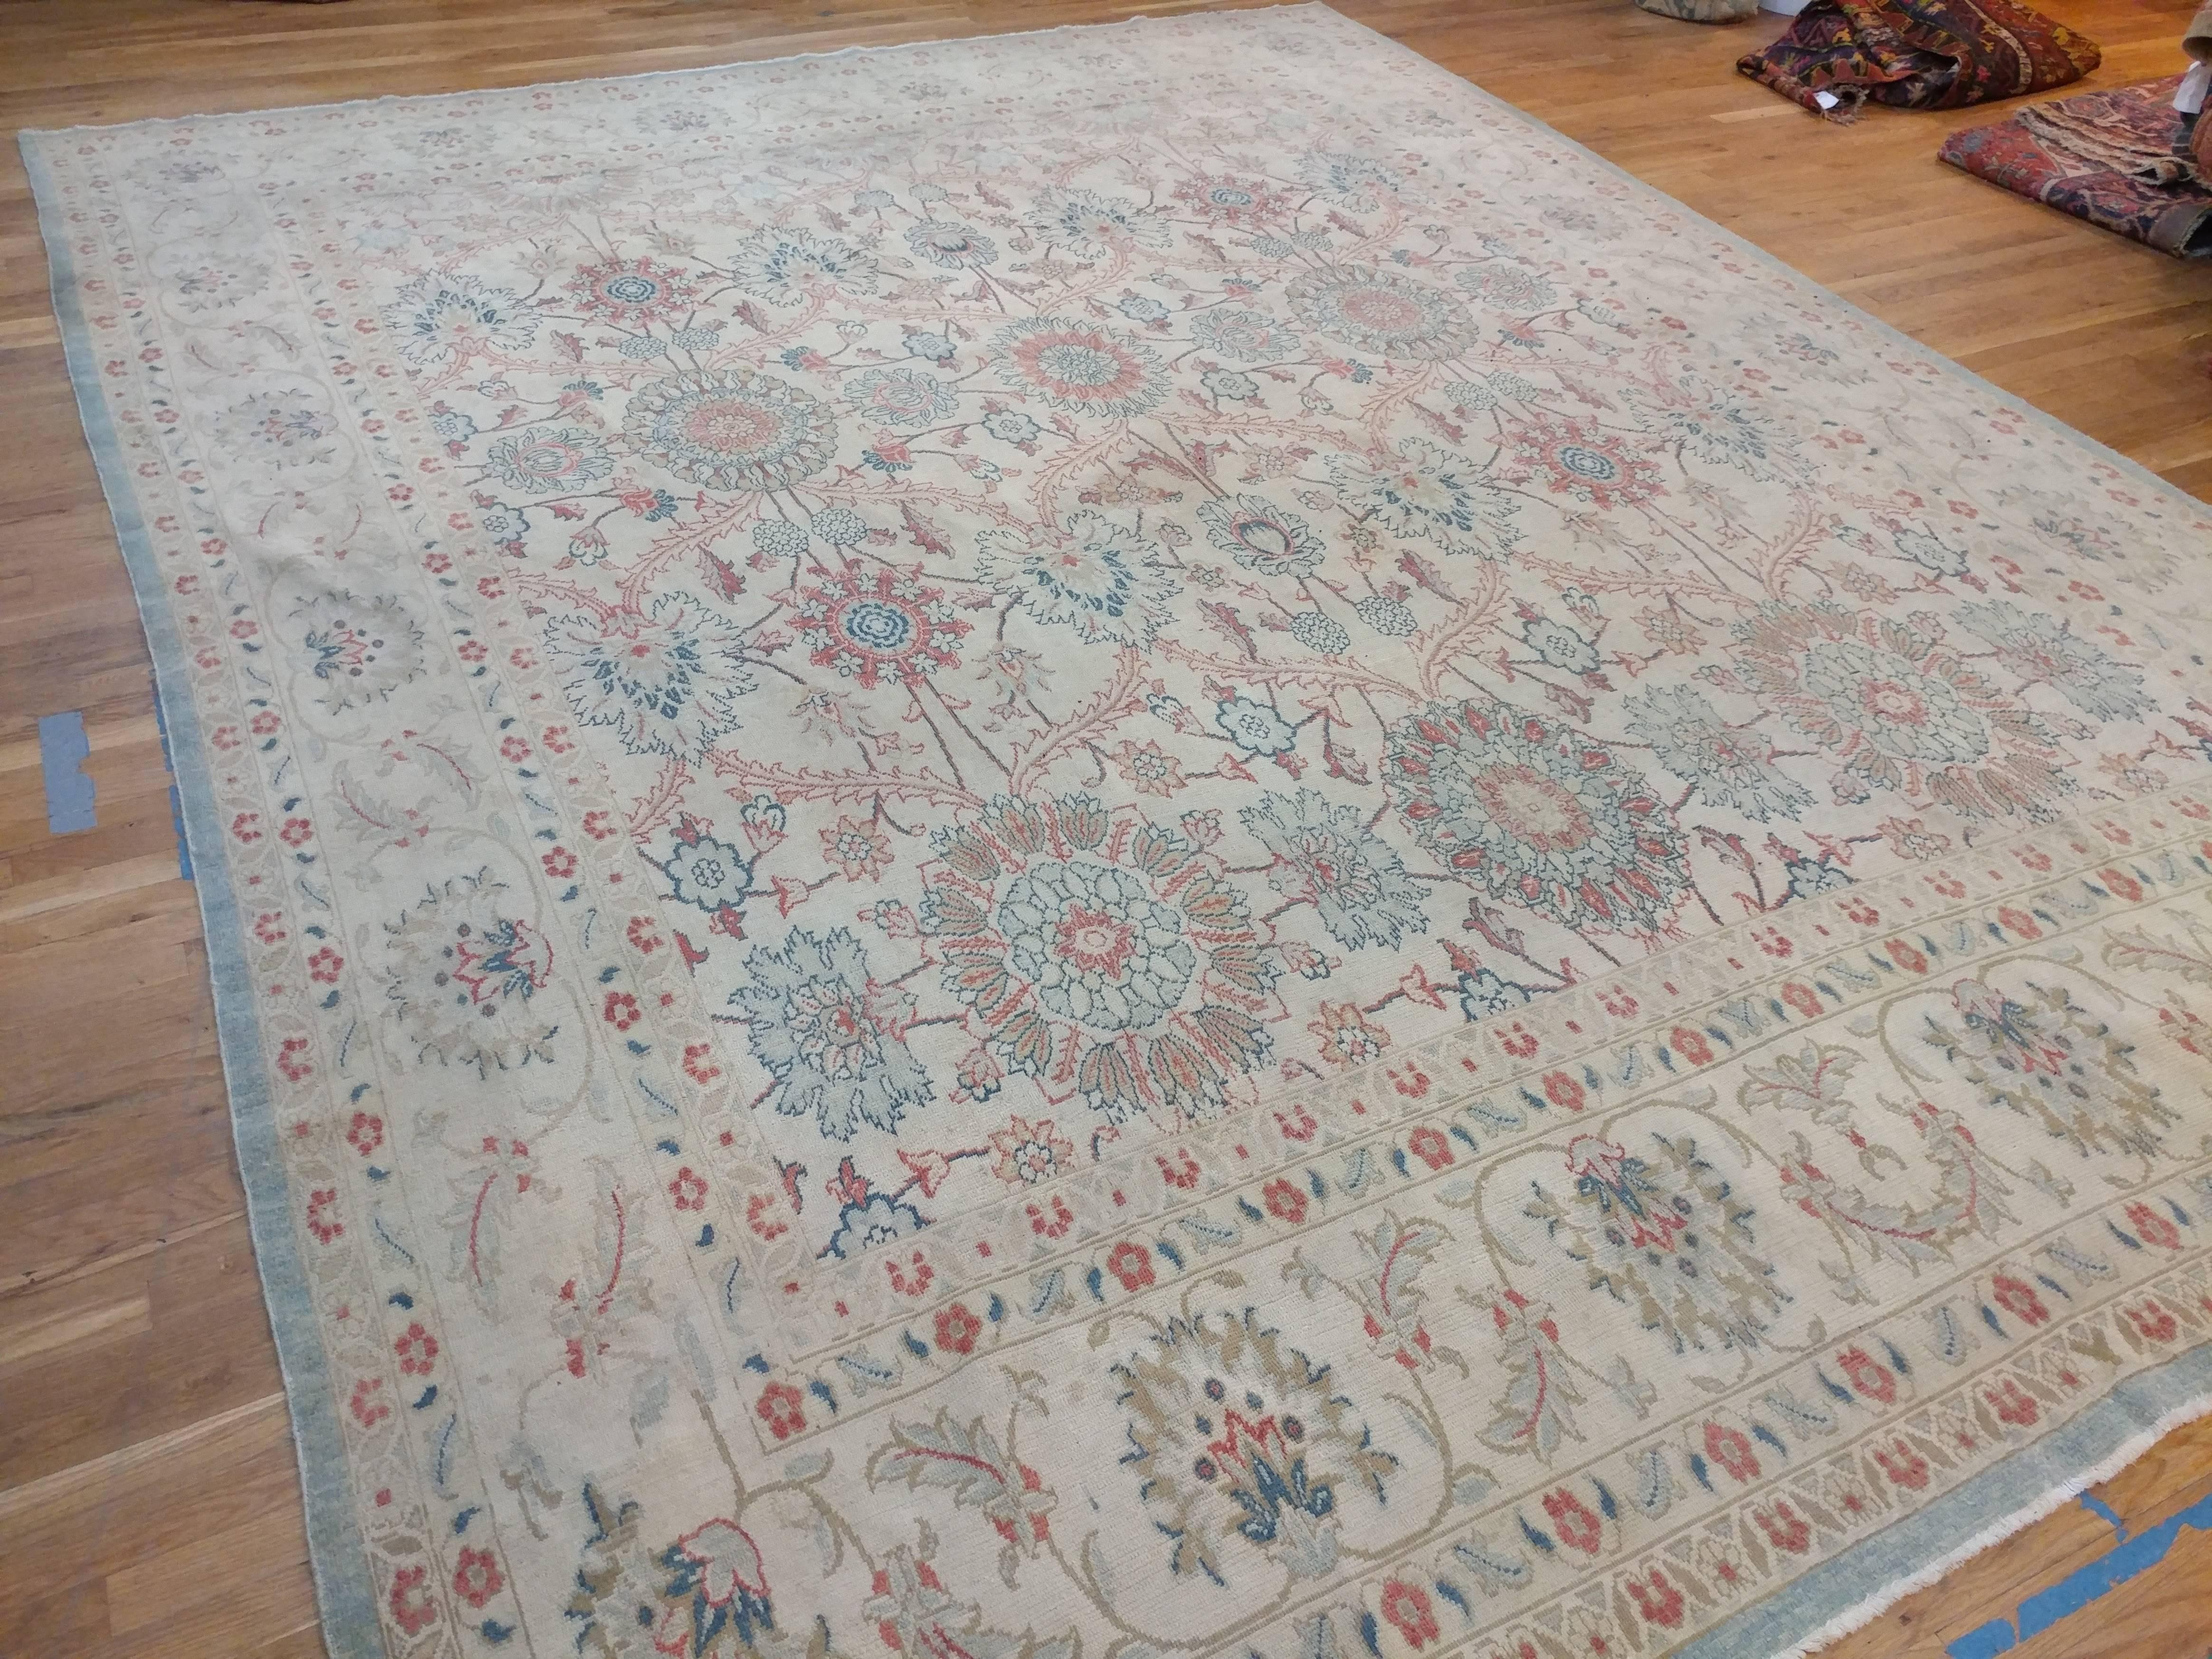 20th Century Vintage Persian Sultanabad Carpet, Handmade Oriental, Light Blue, Taupe, Ivory